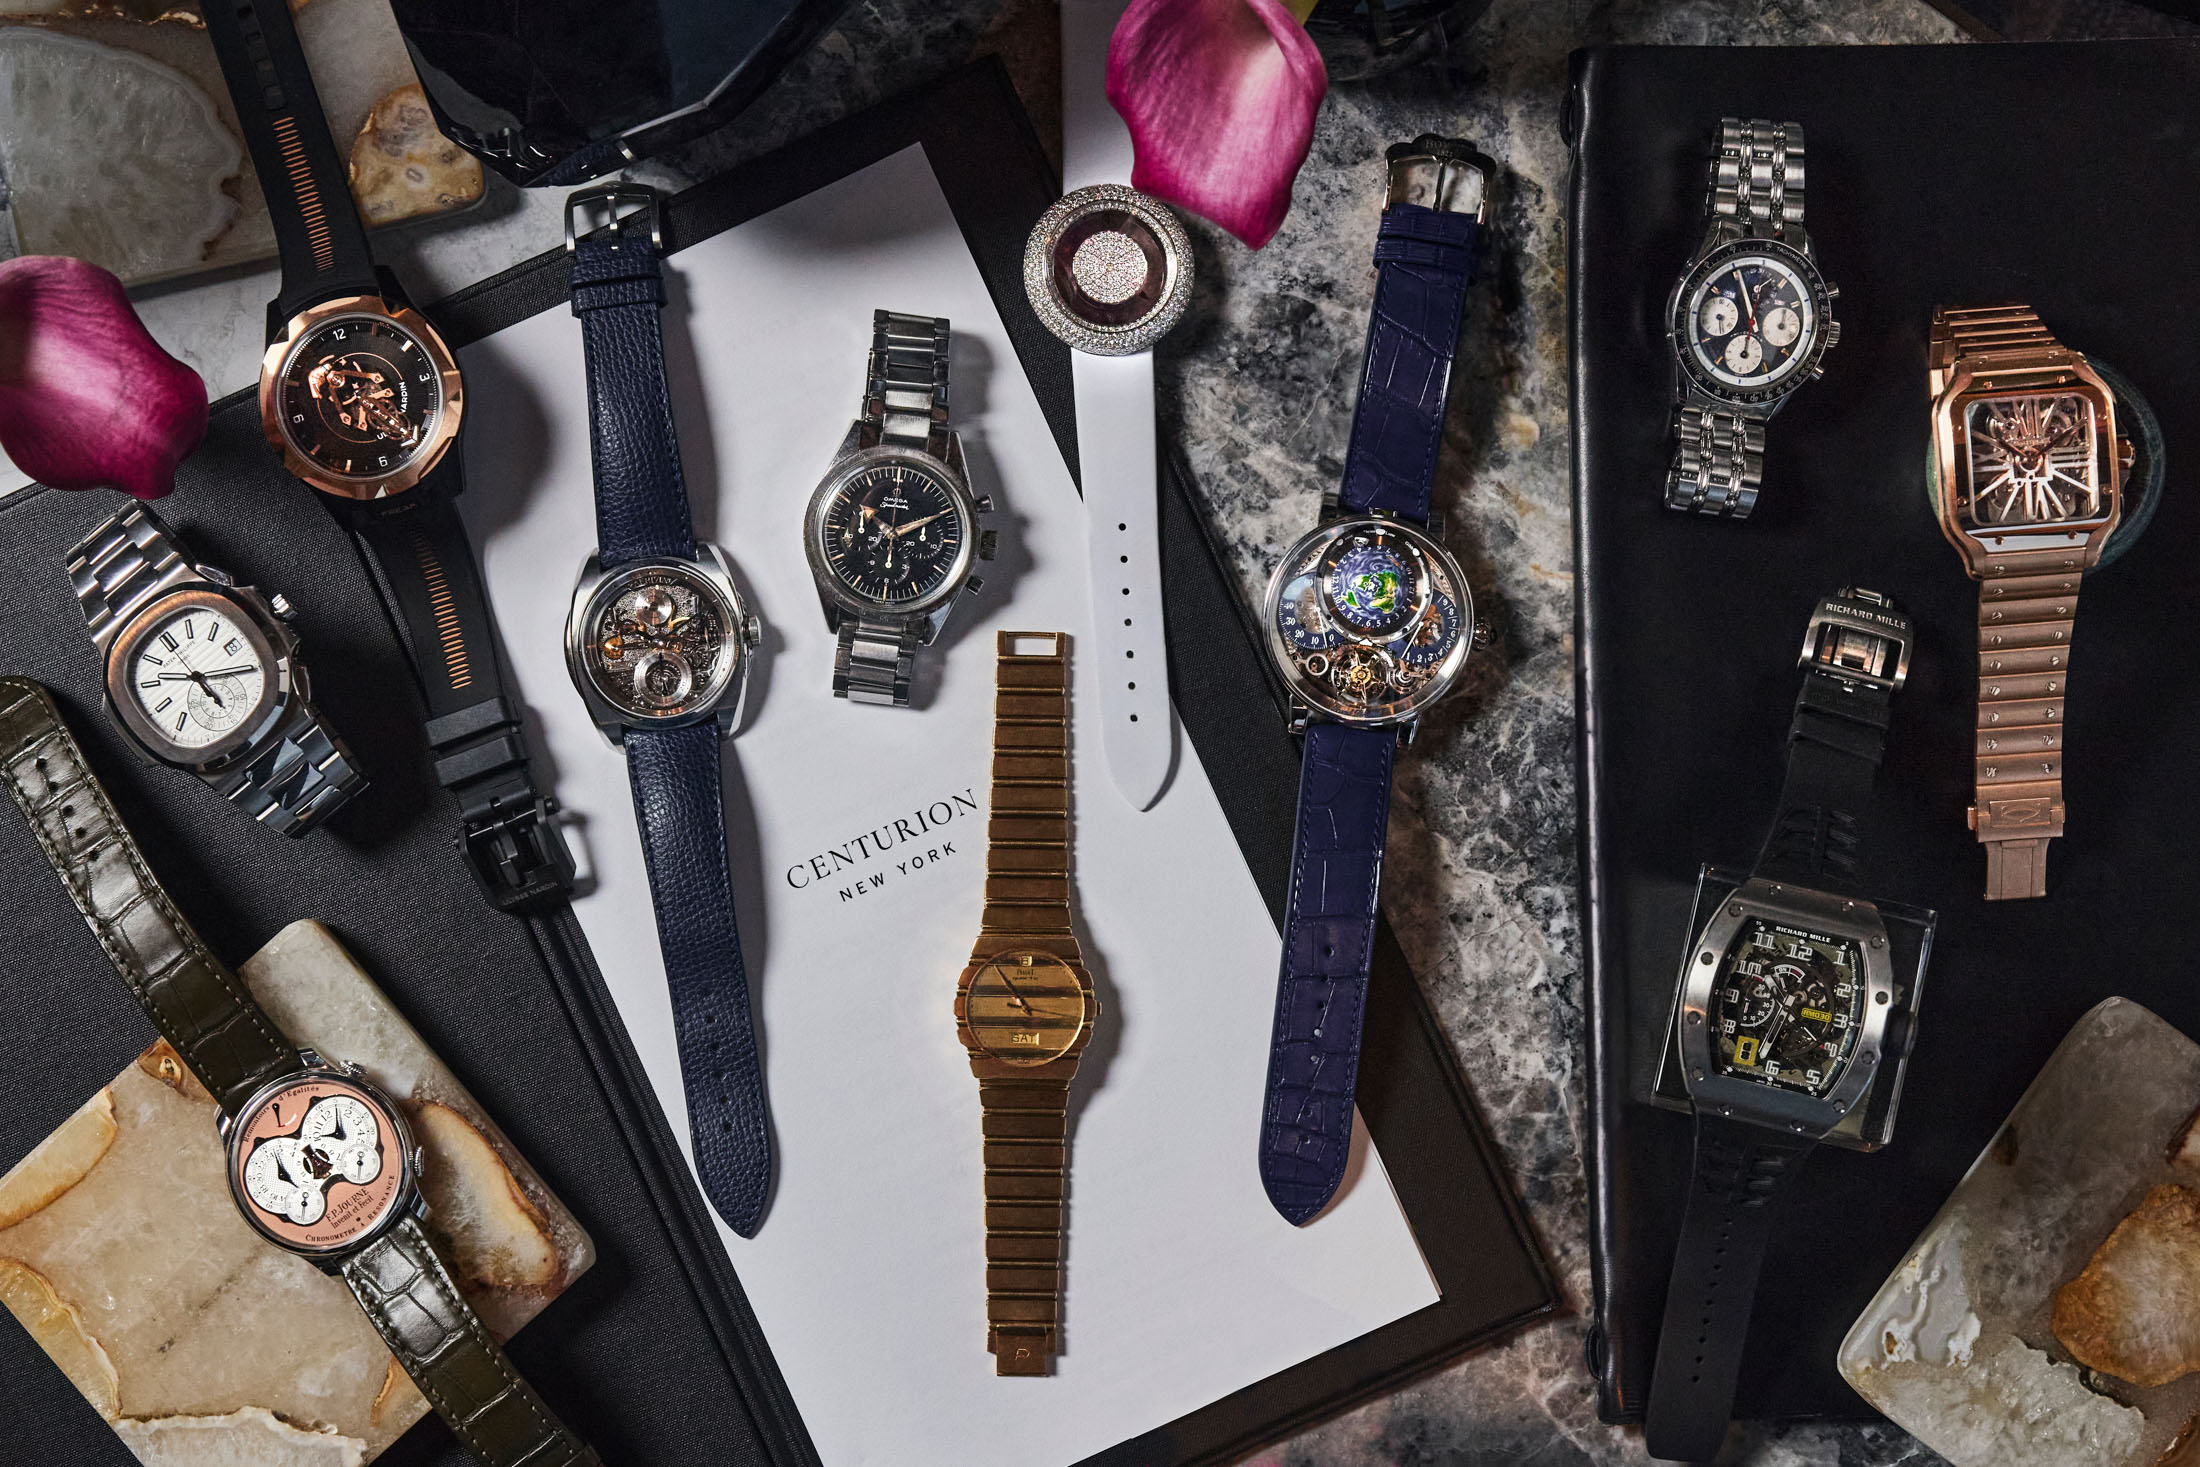 reward watches for men rd82004m fashion| Alibaba.com